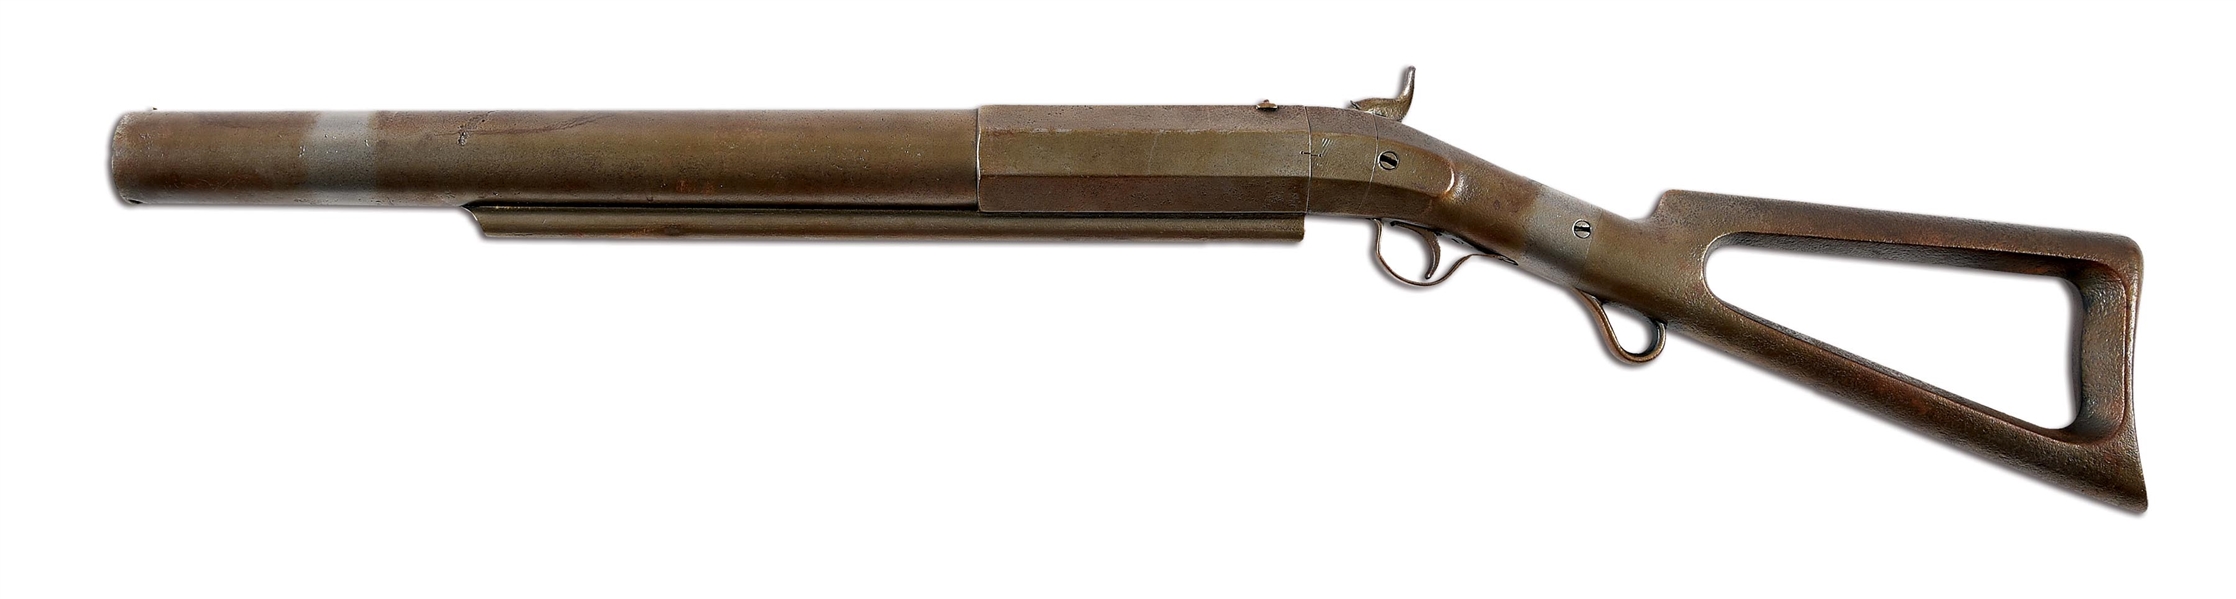 (A) GOLIATH WHALING GUN, CIRCA 18TH CENTURY, FOR BOMB LANCE USE.